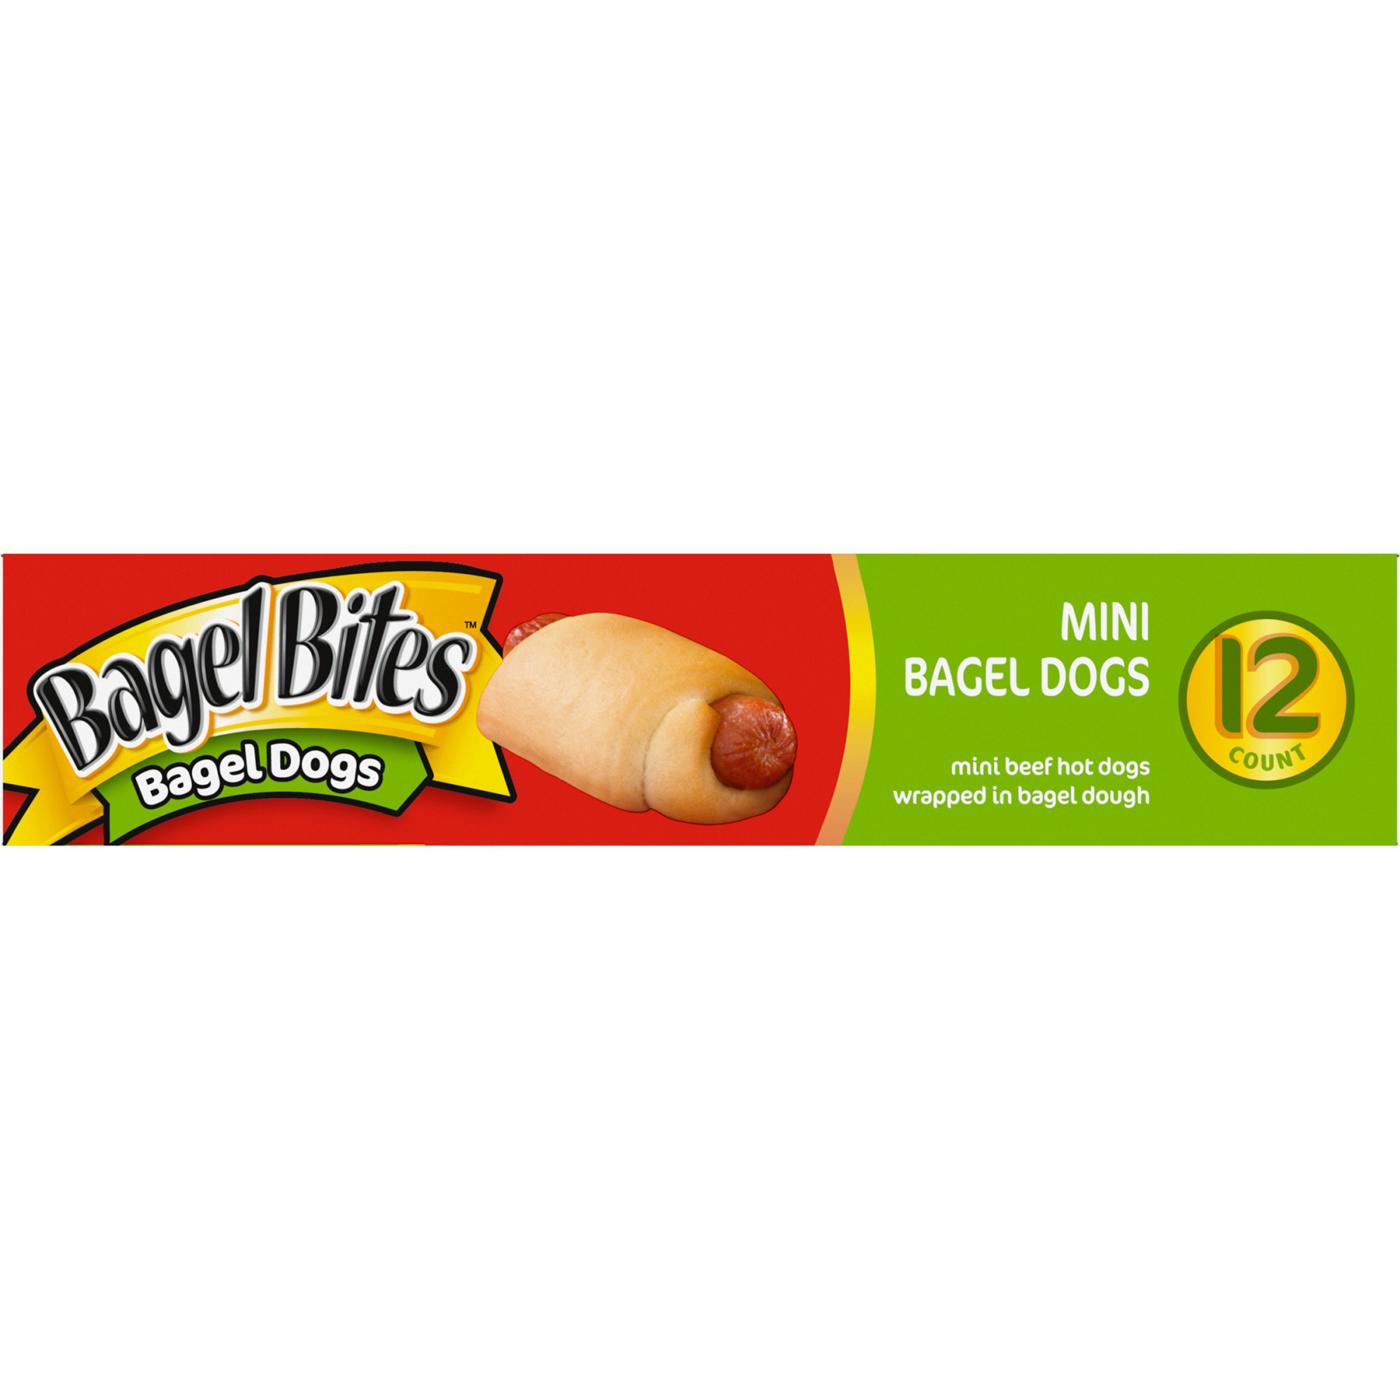 Bagel Bites Mini Bagel Dogs; image 7 of 8